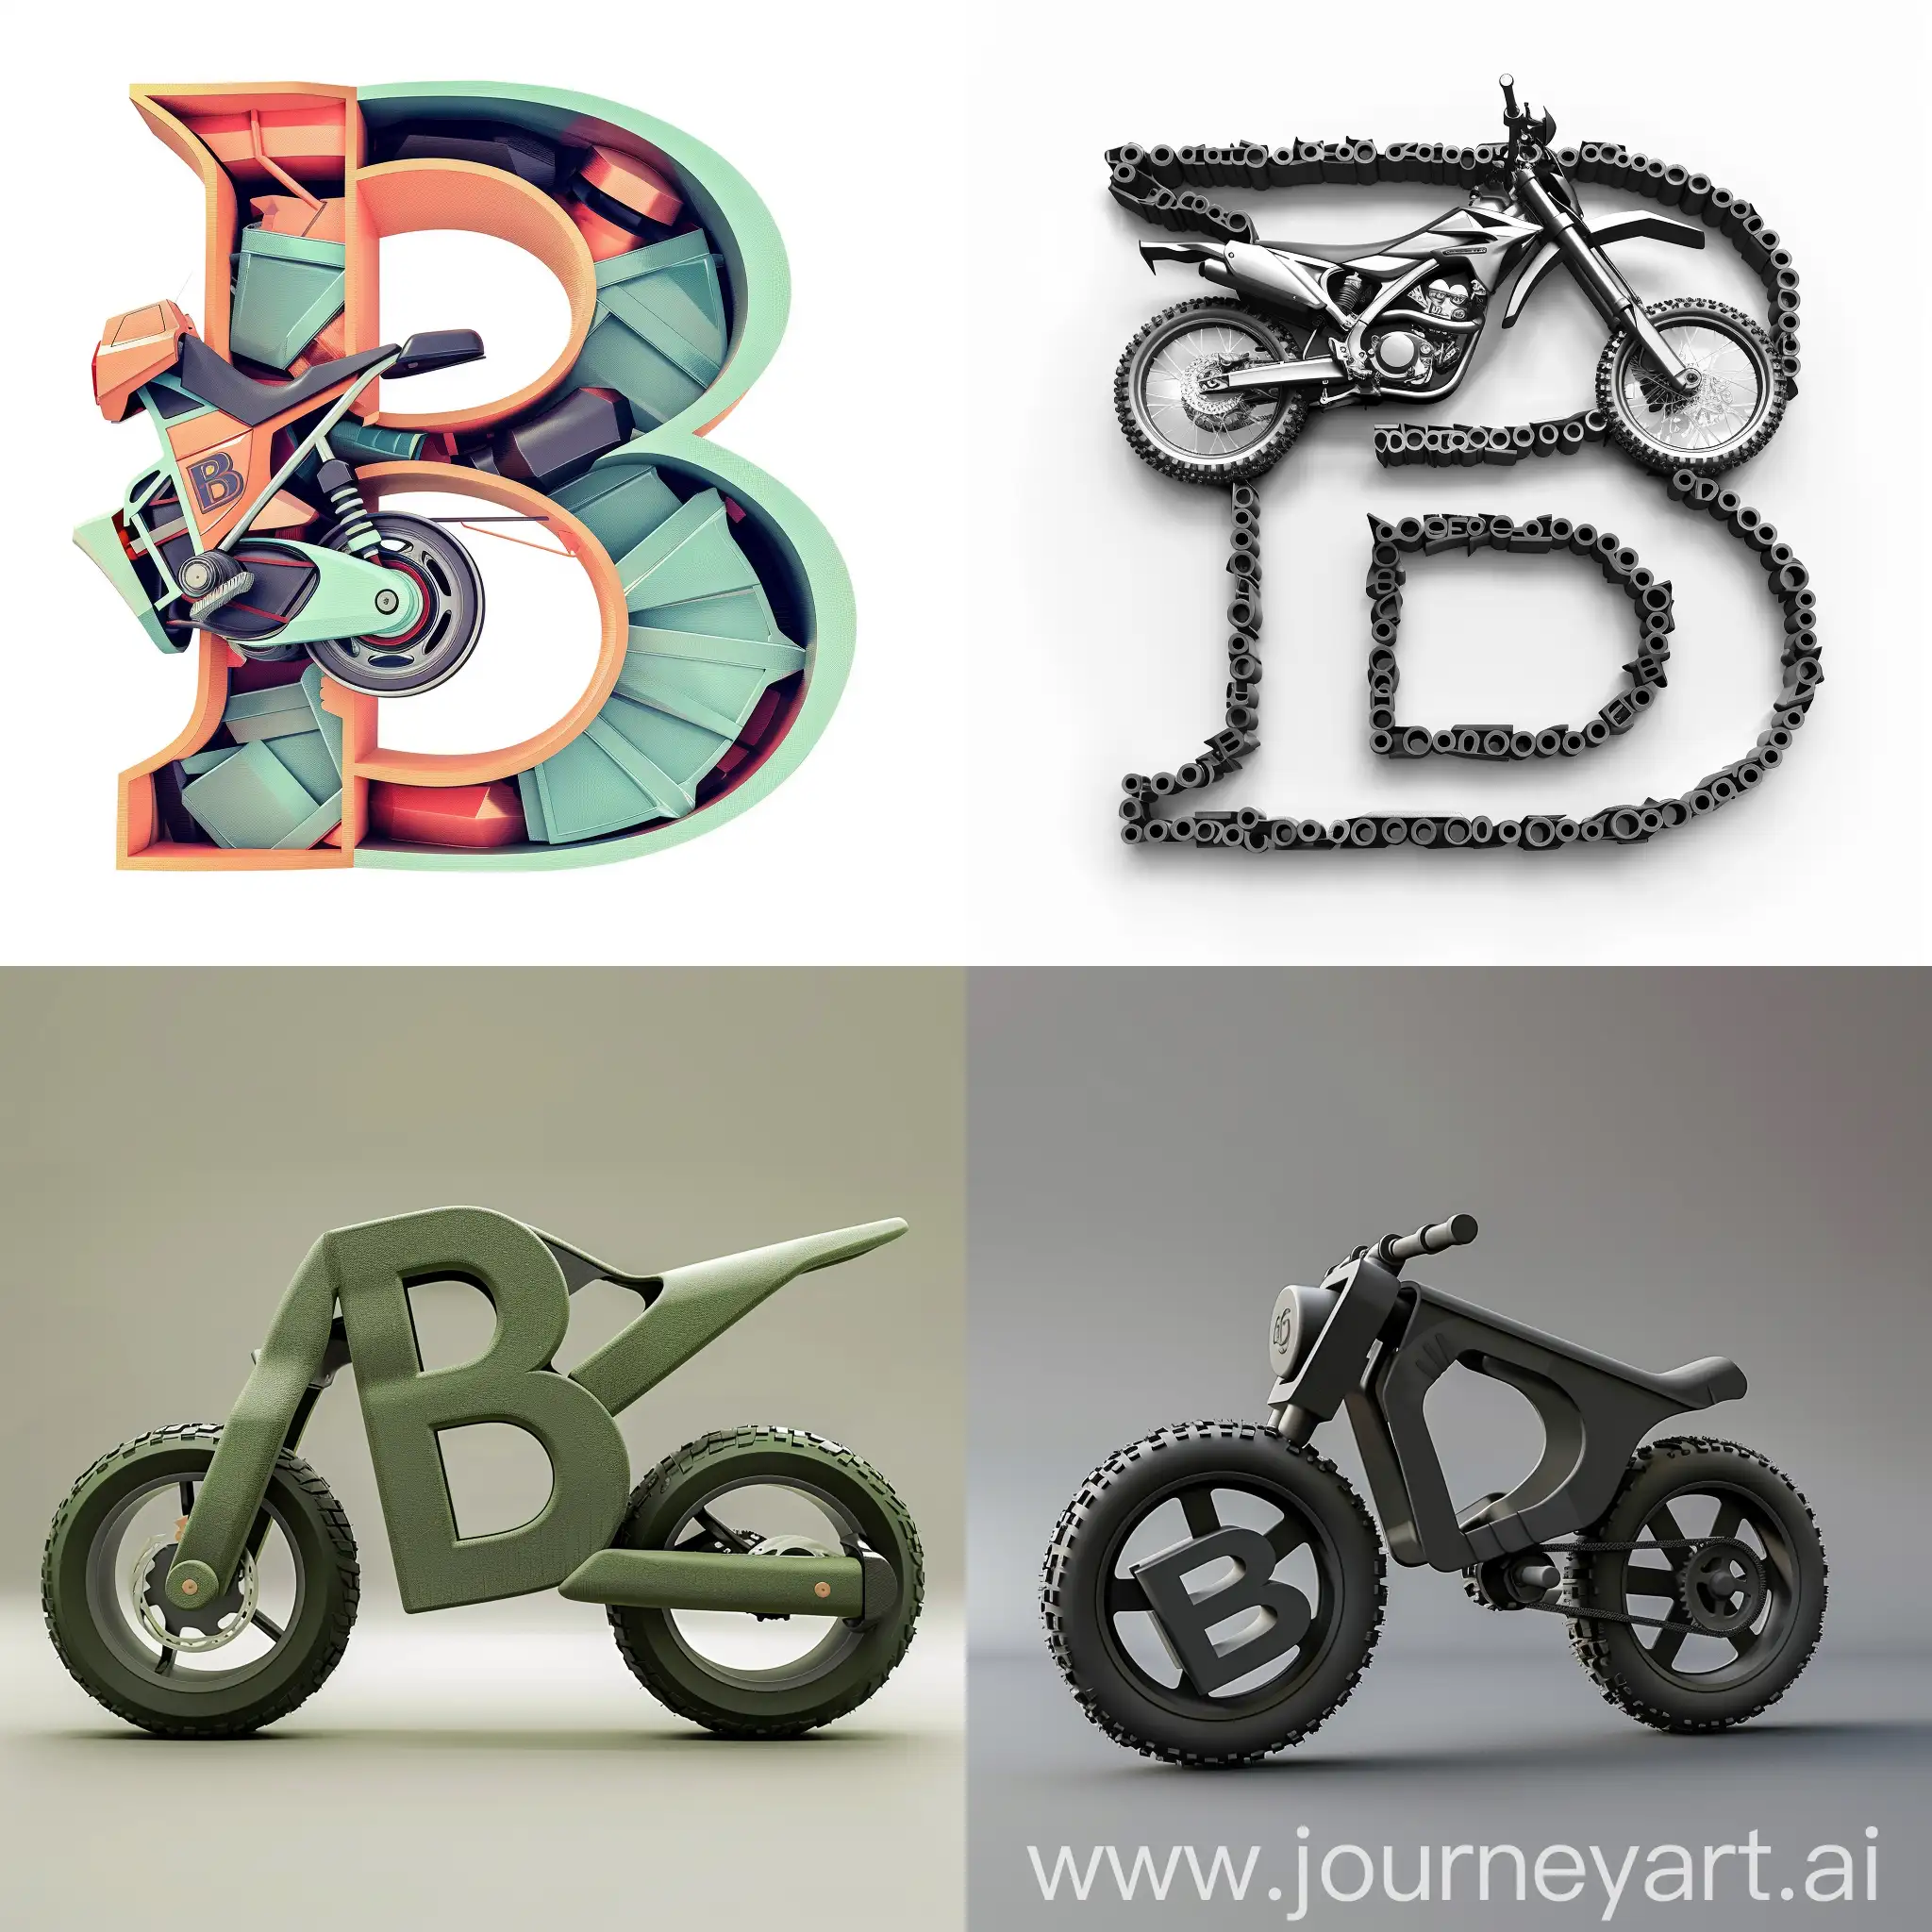 Breathtaking-MotorcycleShaped-Letter-B-Striking-Visual-Appeal-in-Versatile-11-Aspect-Ratio